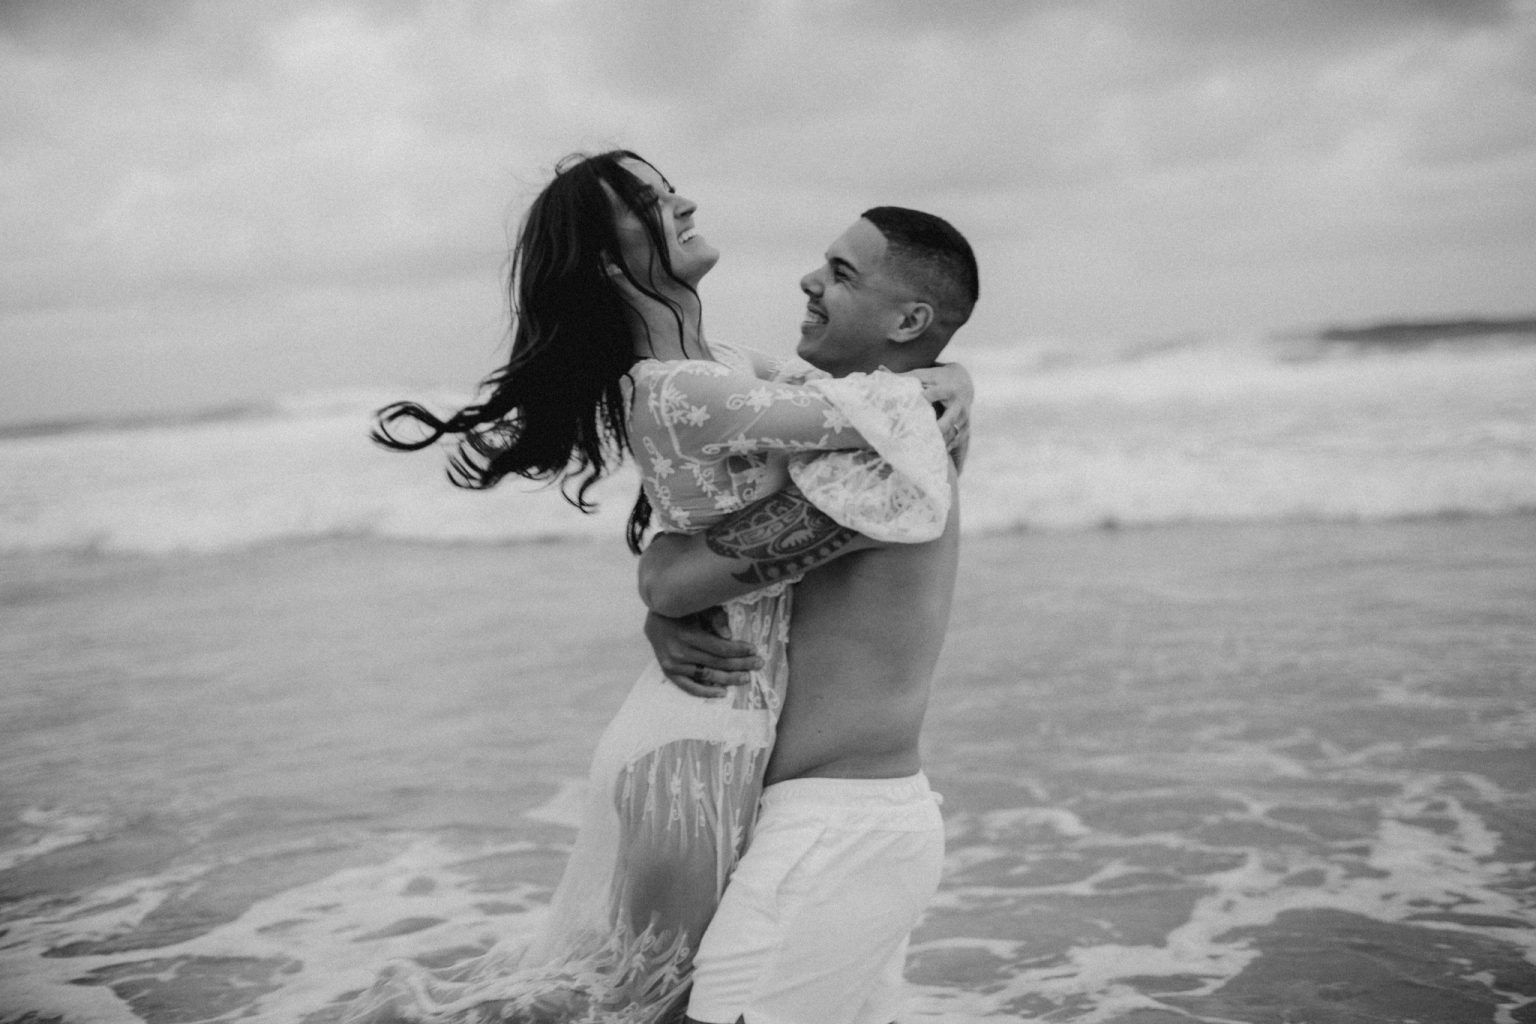 tattooed man and woman wearing lace on beach